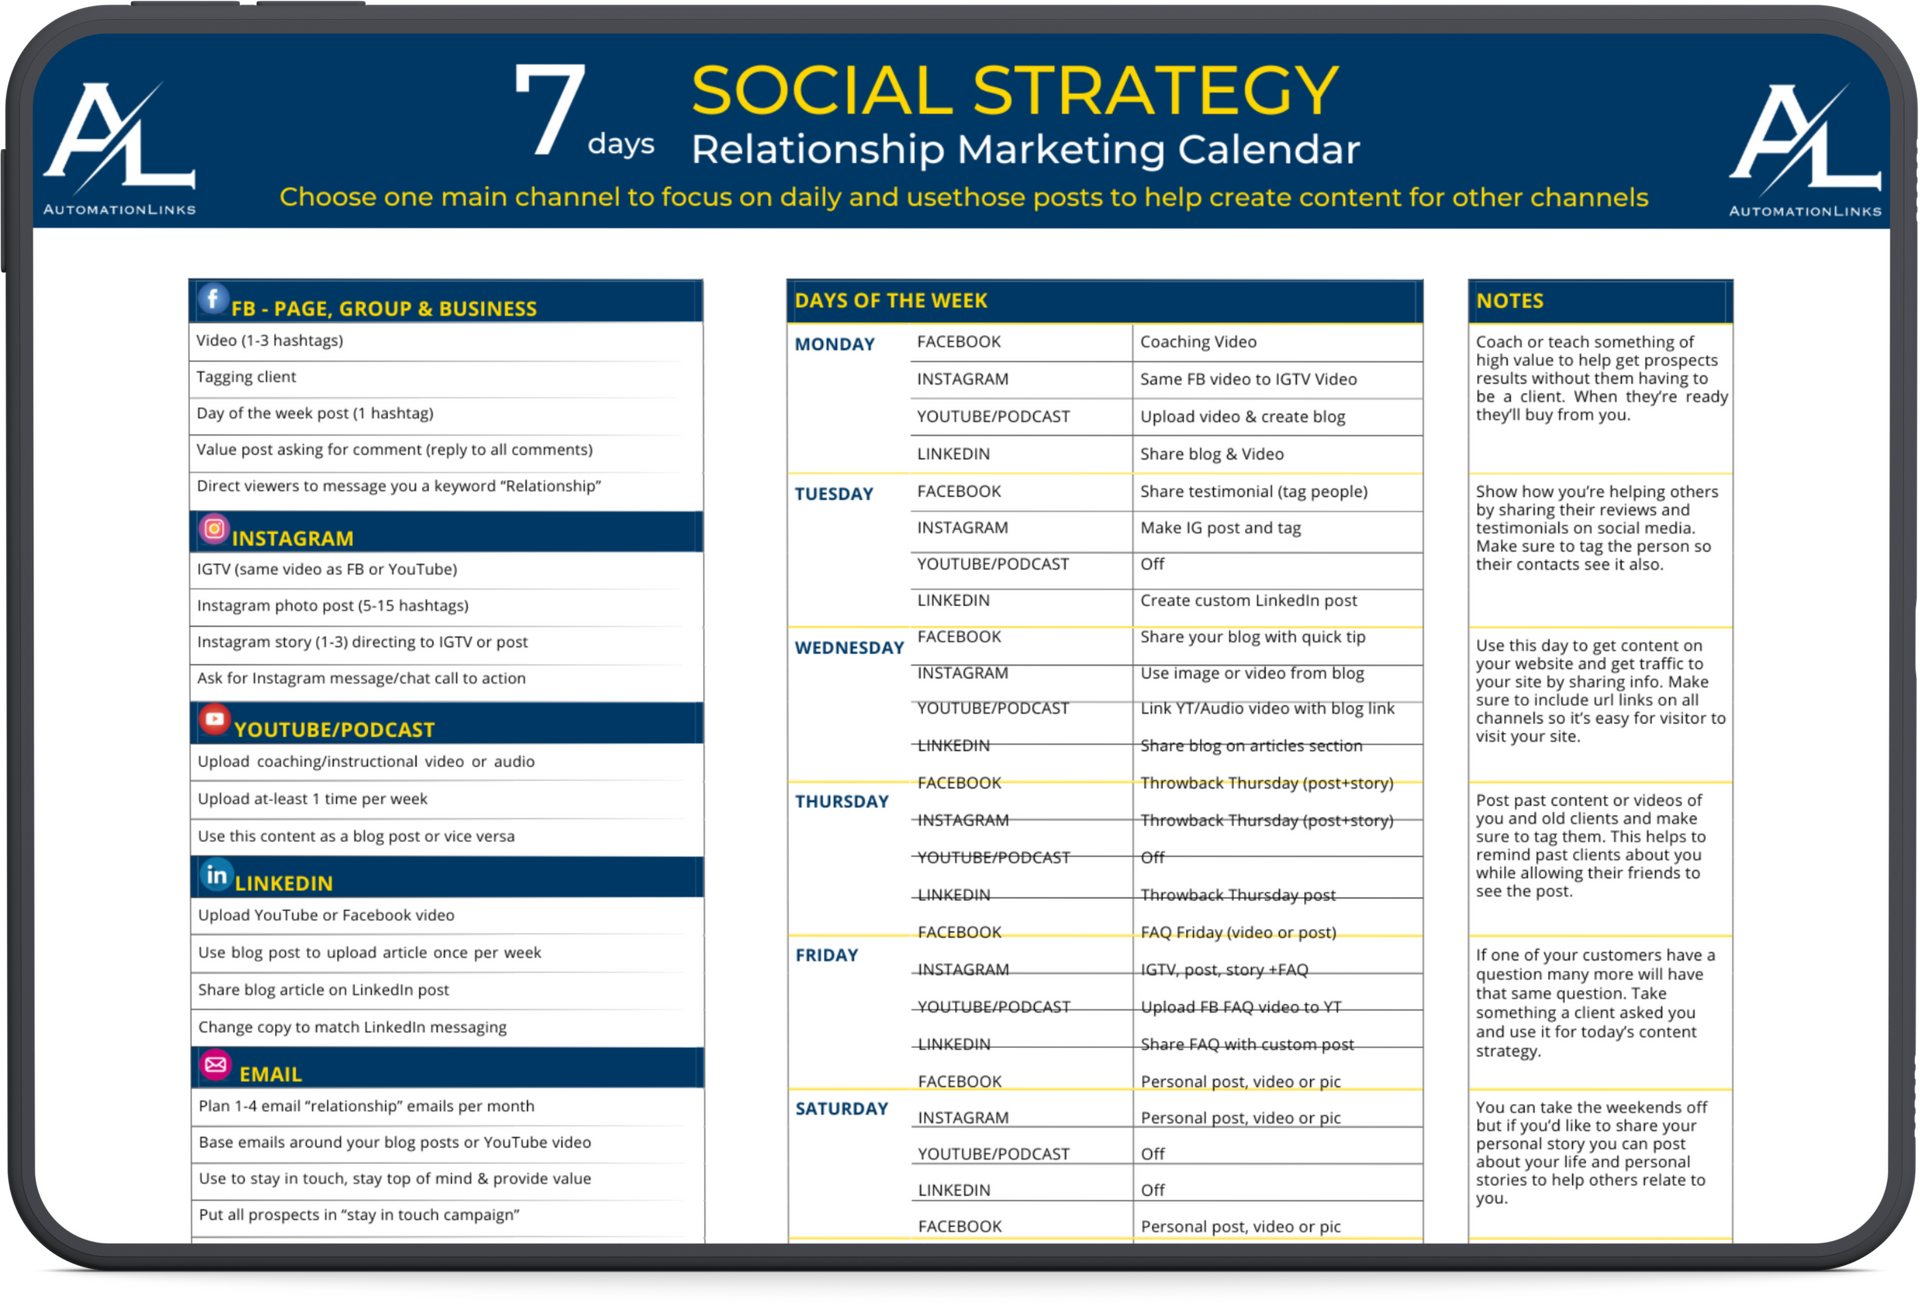 A social strategy 7 day relationship marketing calendar